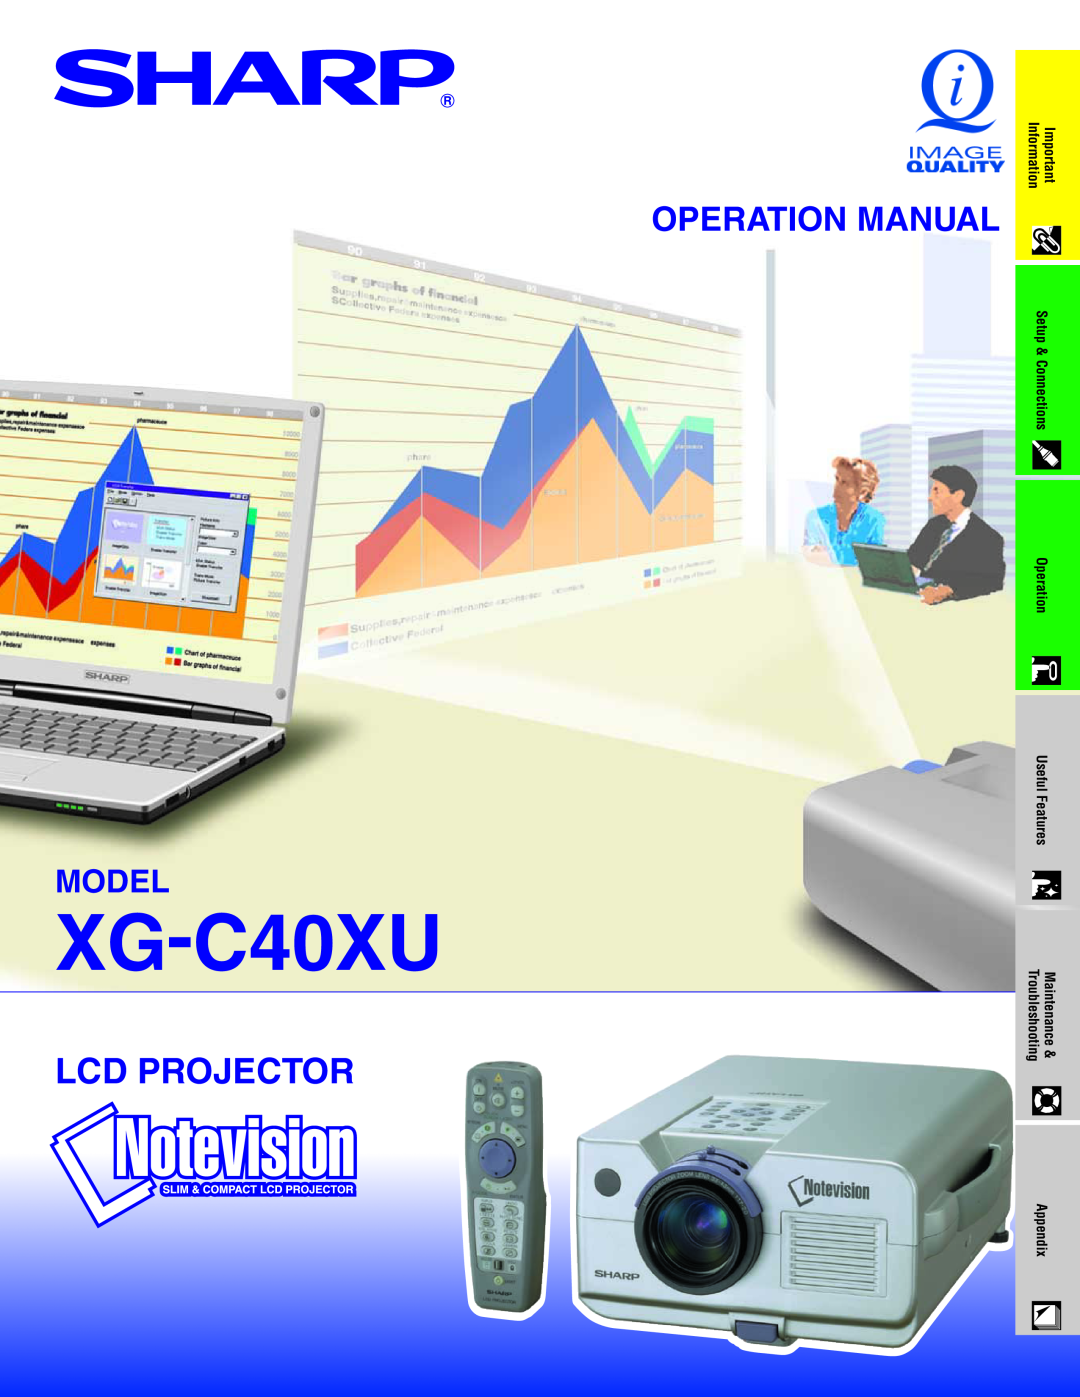 Sharp XG-C40XU operation manual Lcd Projector, Operation Manual, Model, Setup, Information, Troubleshooting, Maintenance 